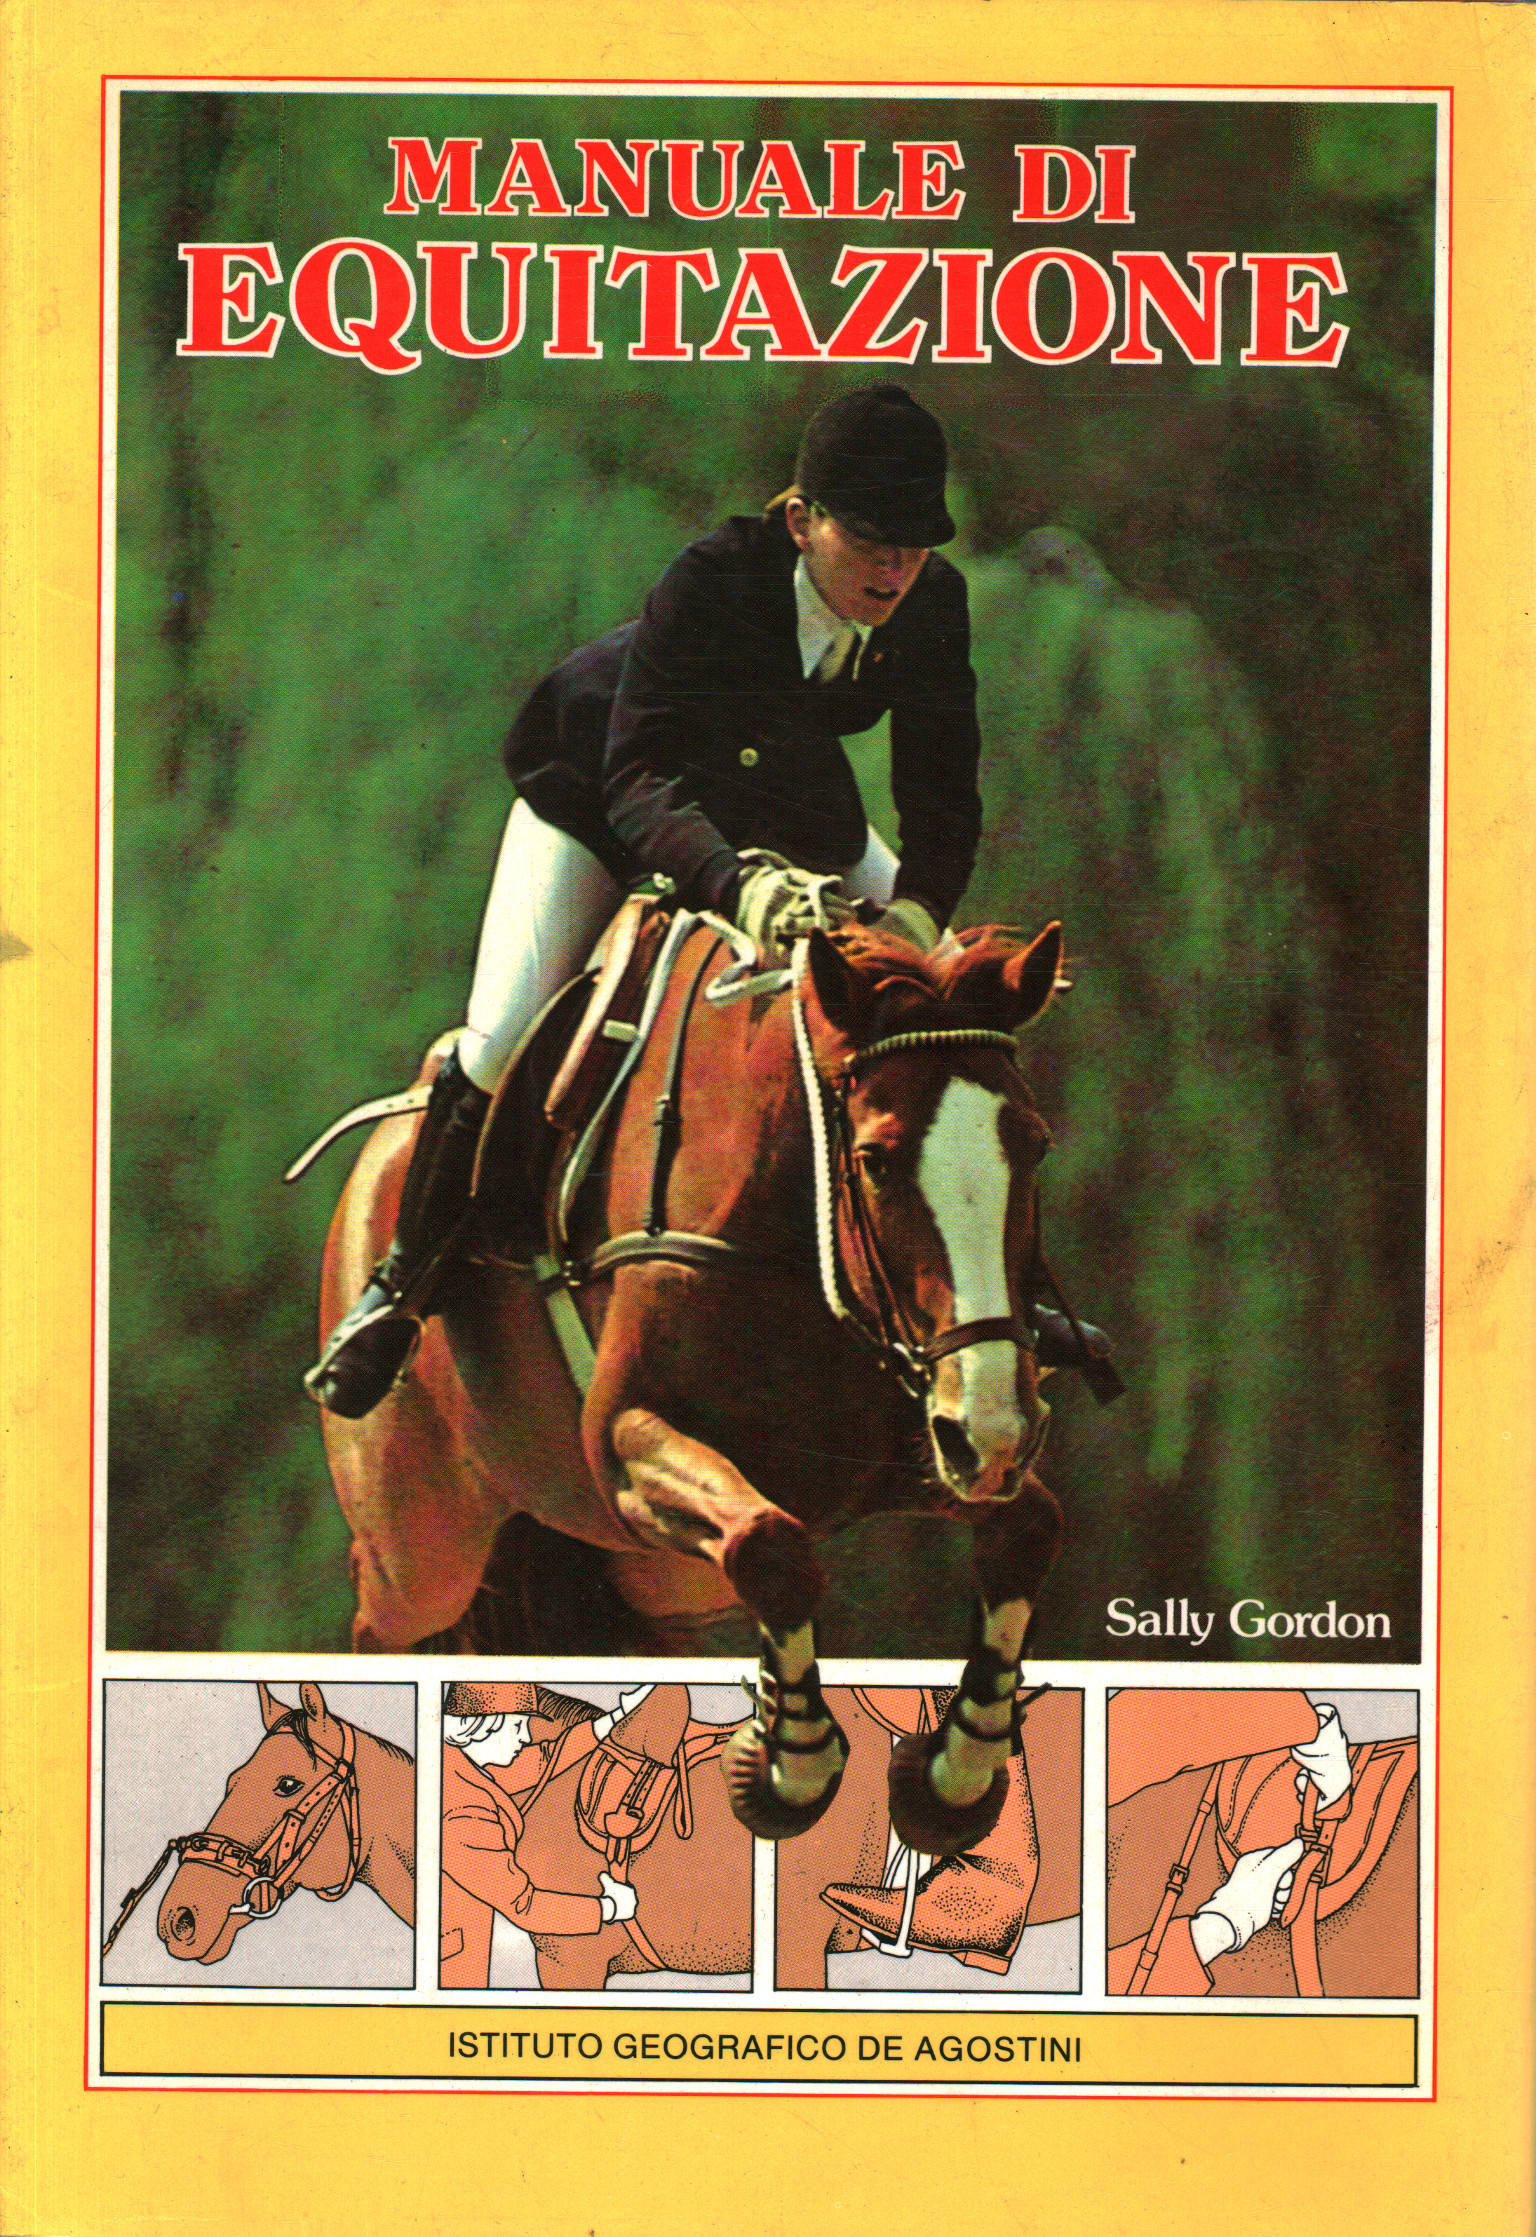 Manuale di equitazione, Sally Gordon